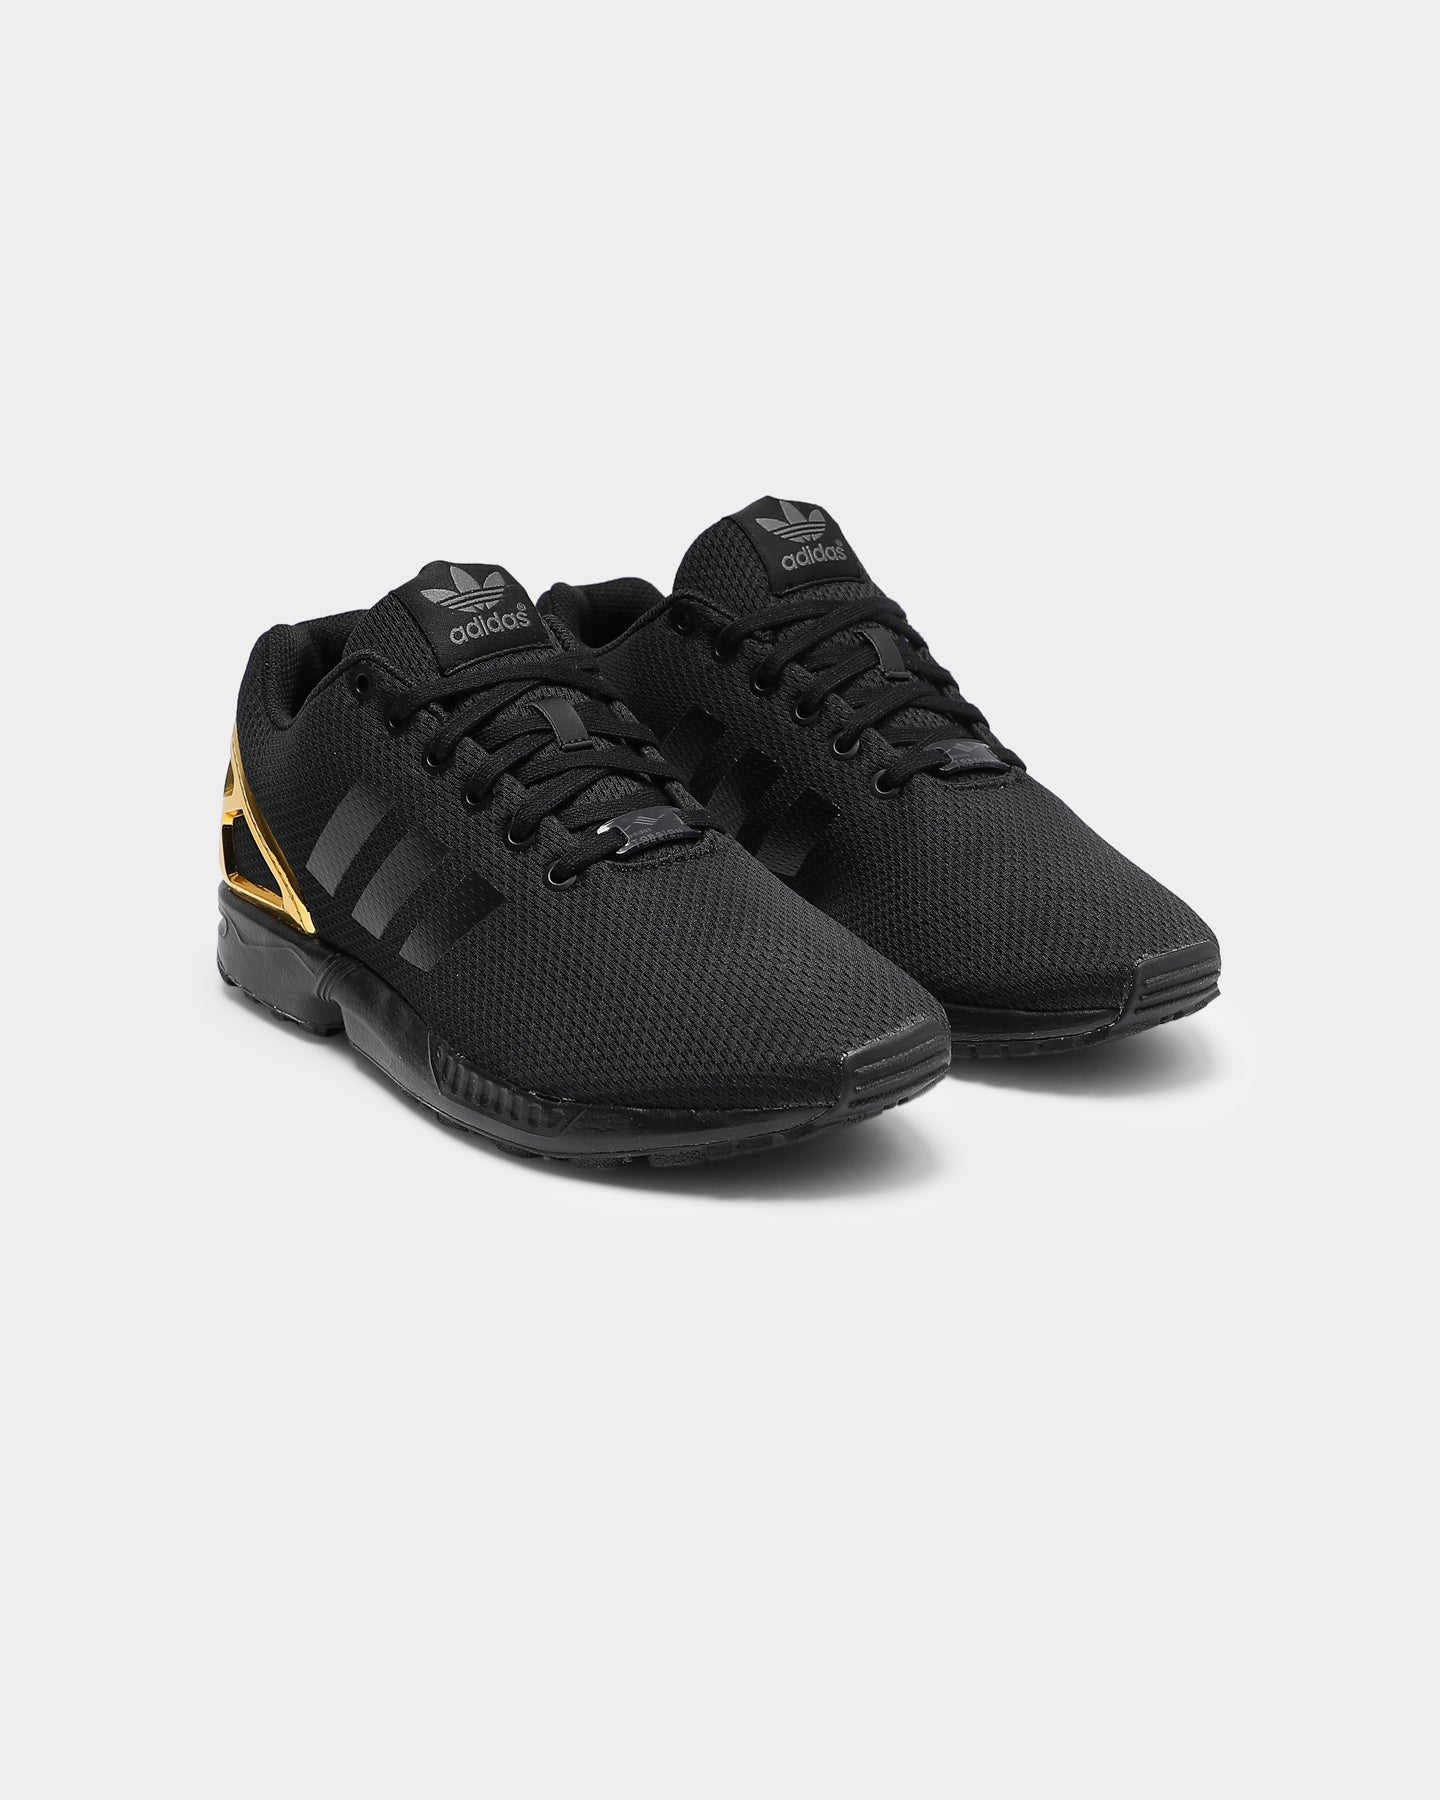 adidas black gold zx flux